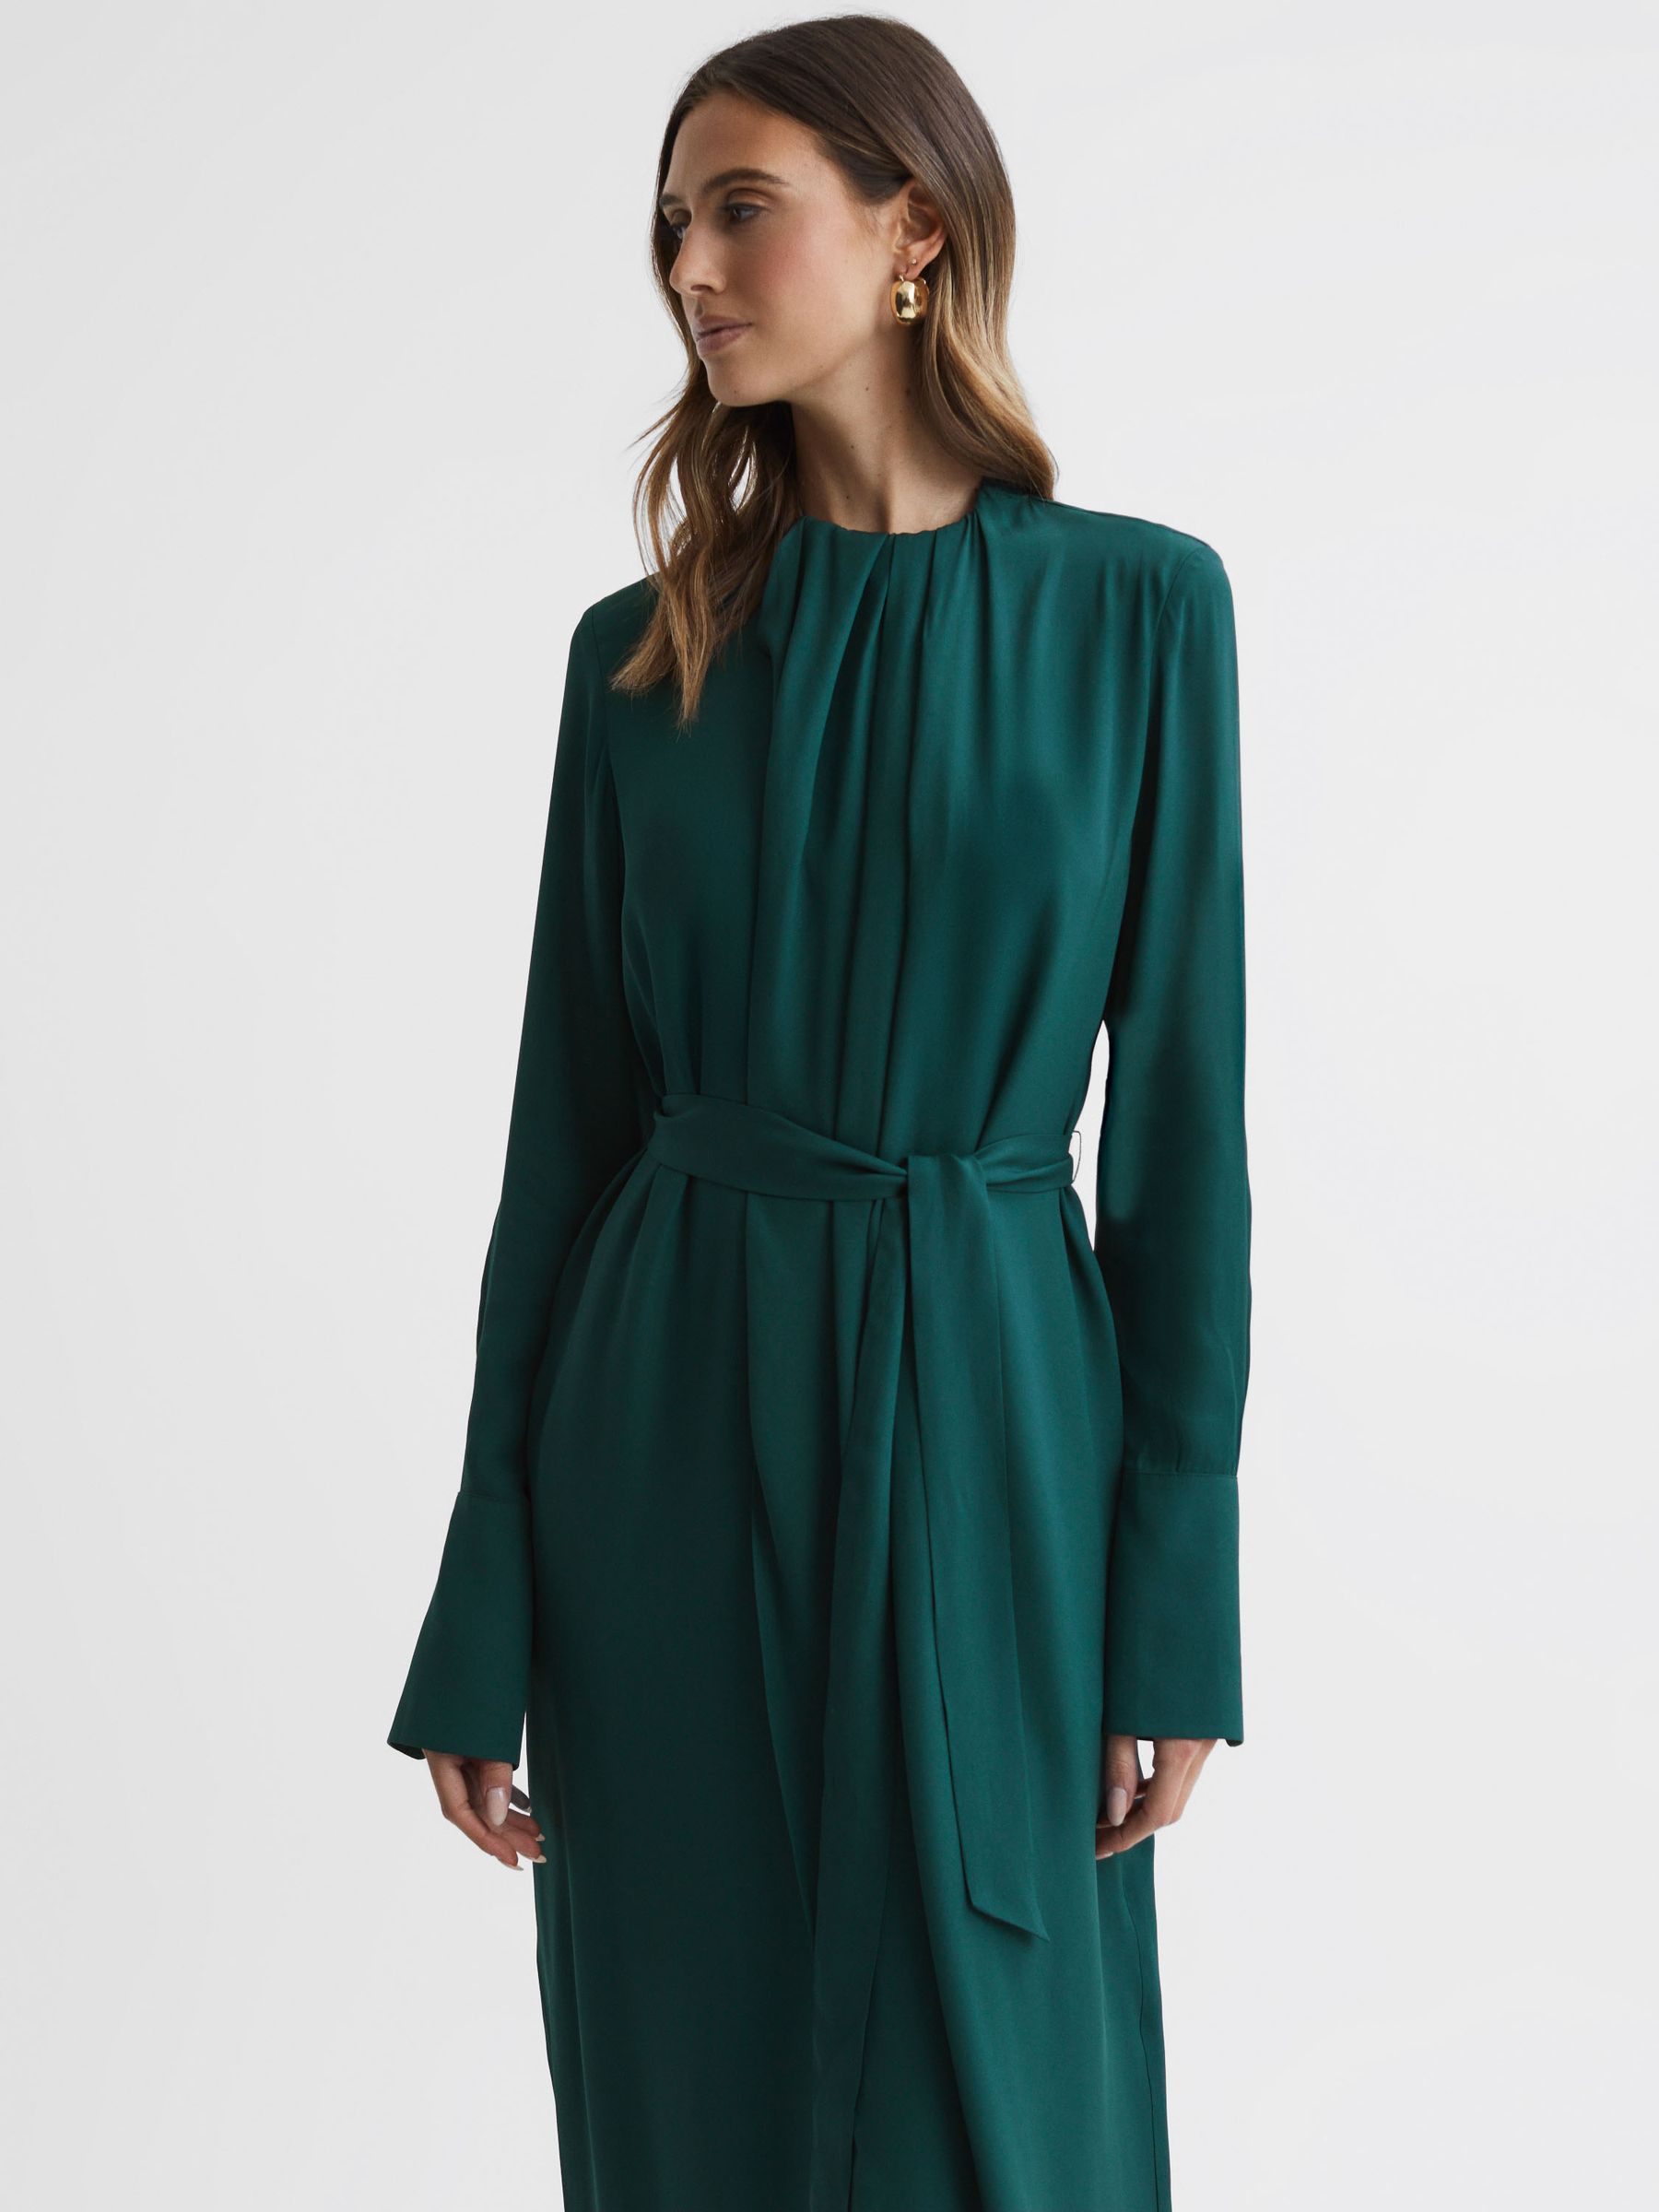 Reiss Phoenix Pleated Long Sleeve Midi Dress | REISS USA